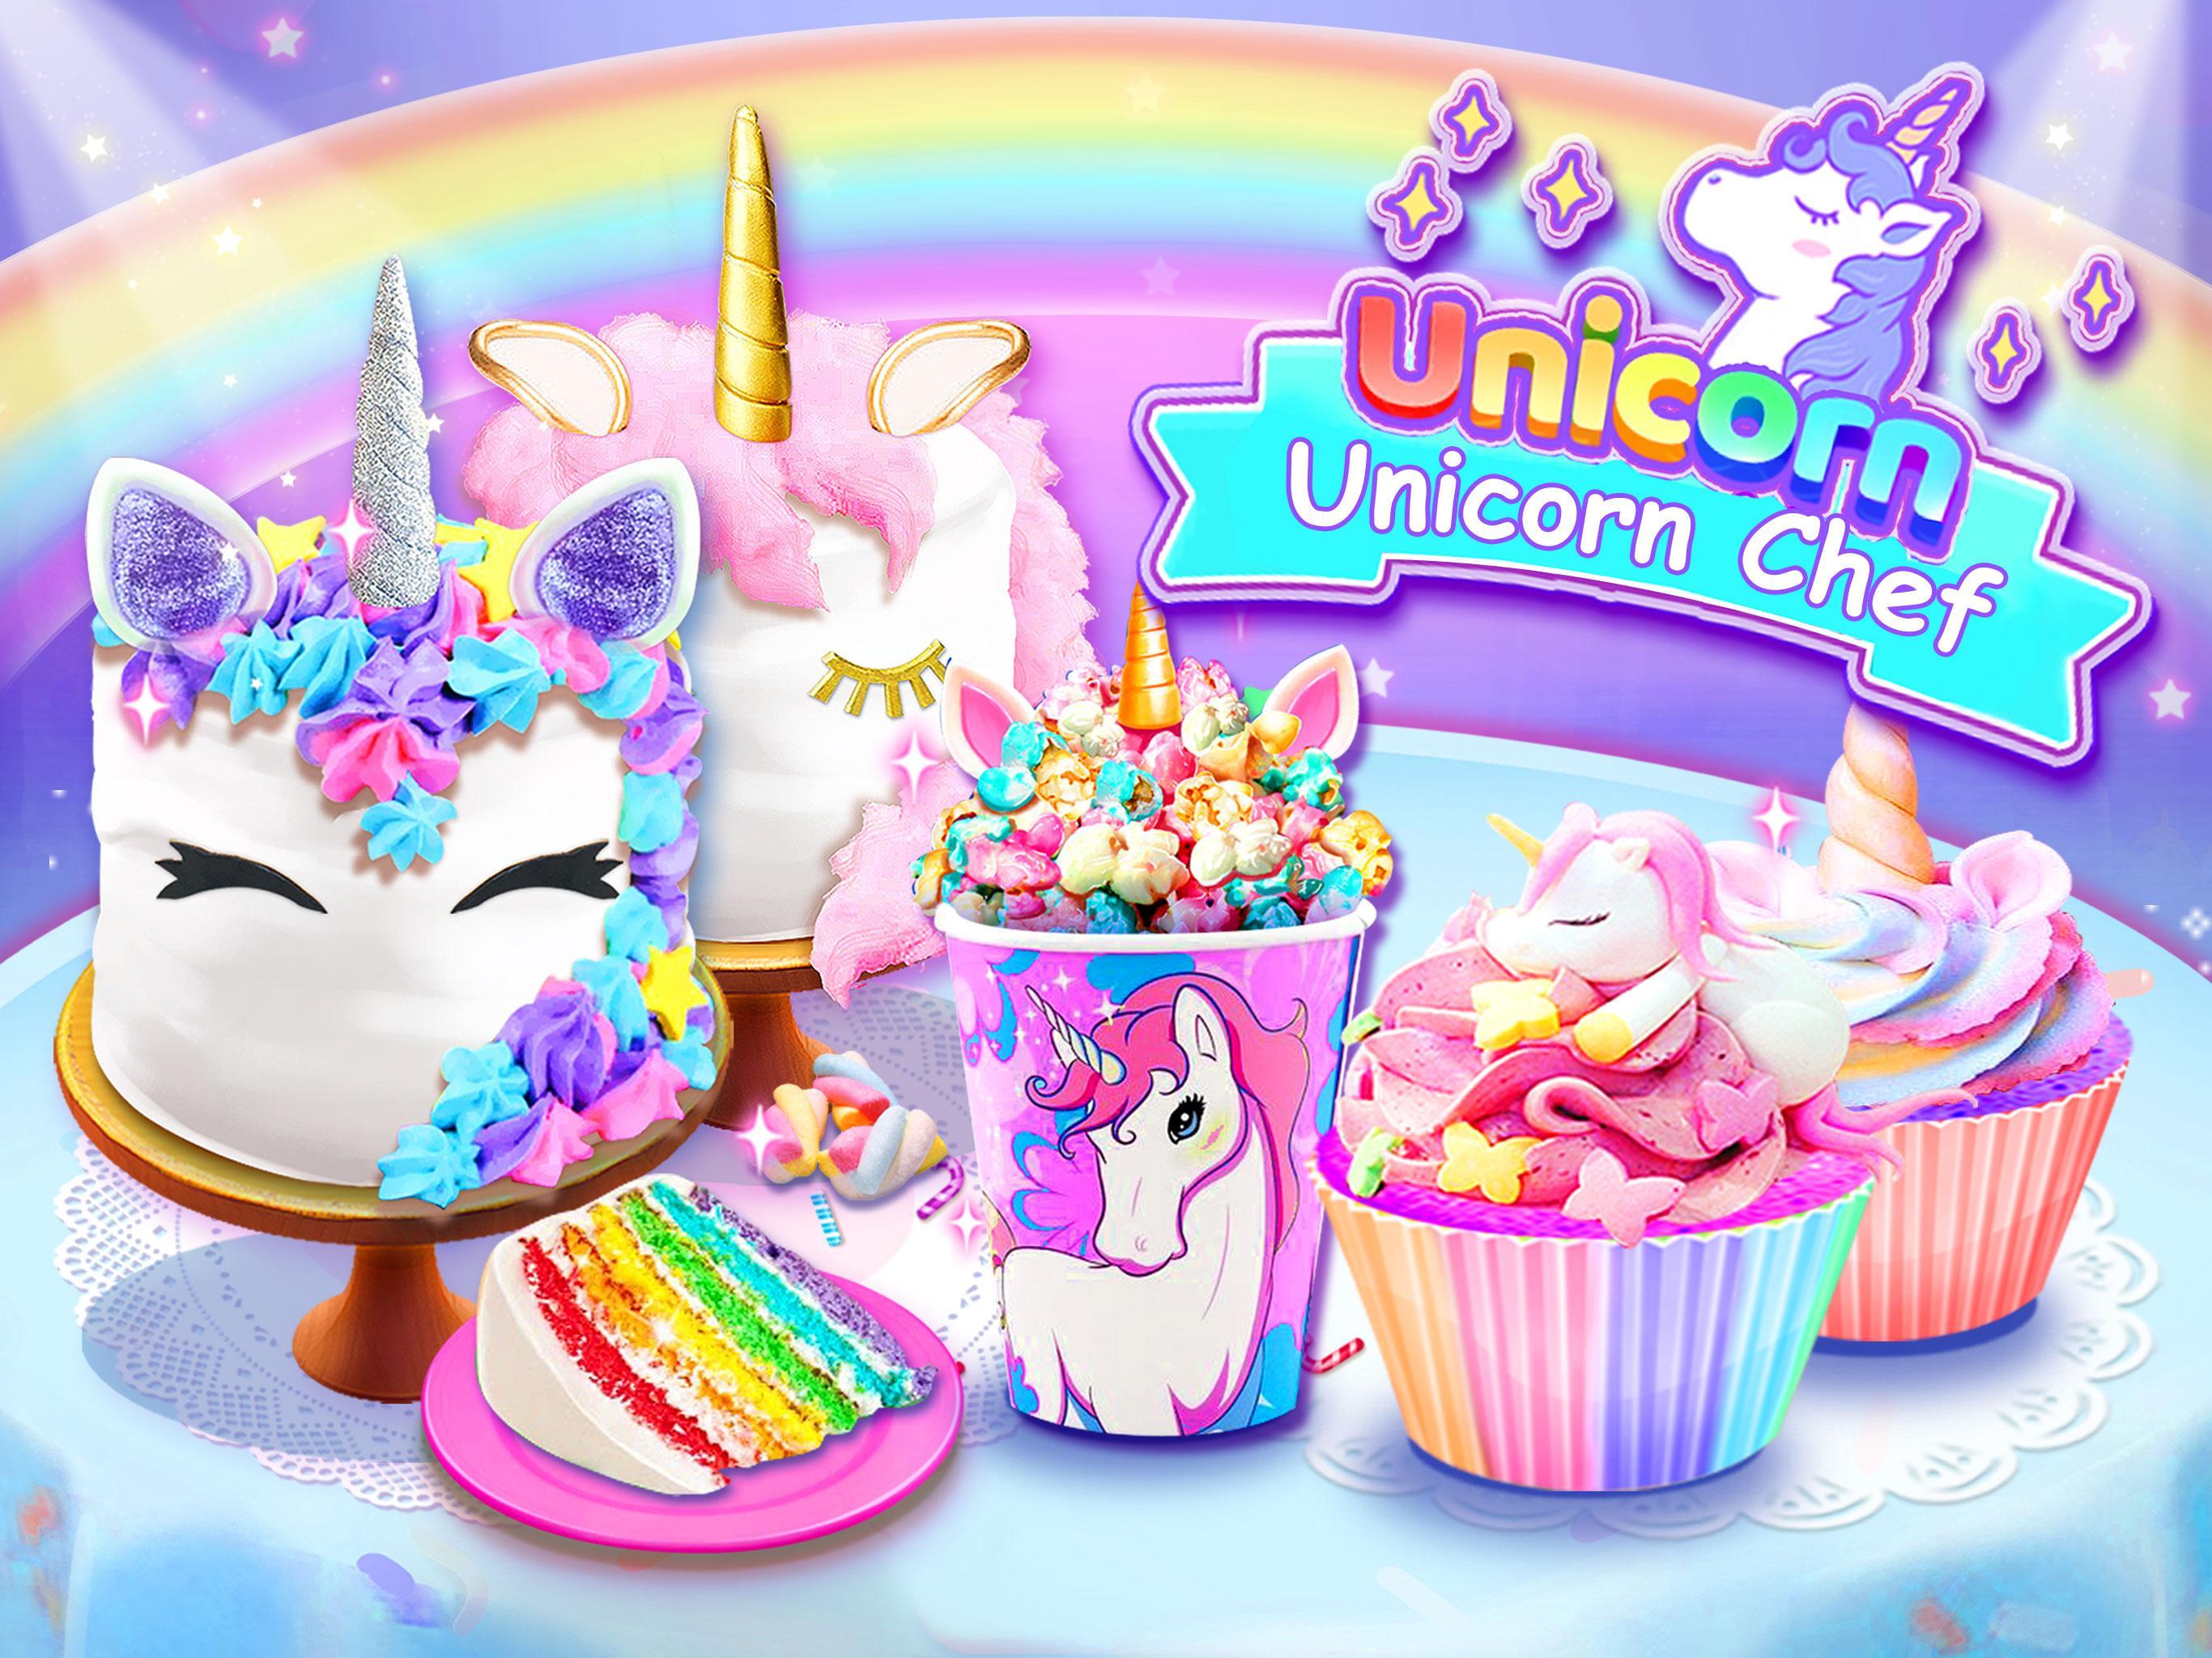 Unicorn Cake Games For Free - 32 Creative DESIGN Ideas